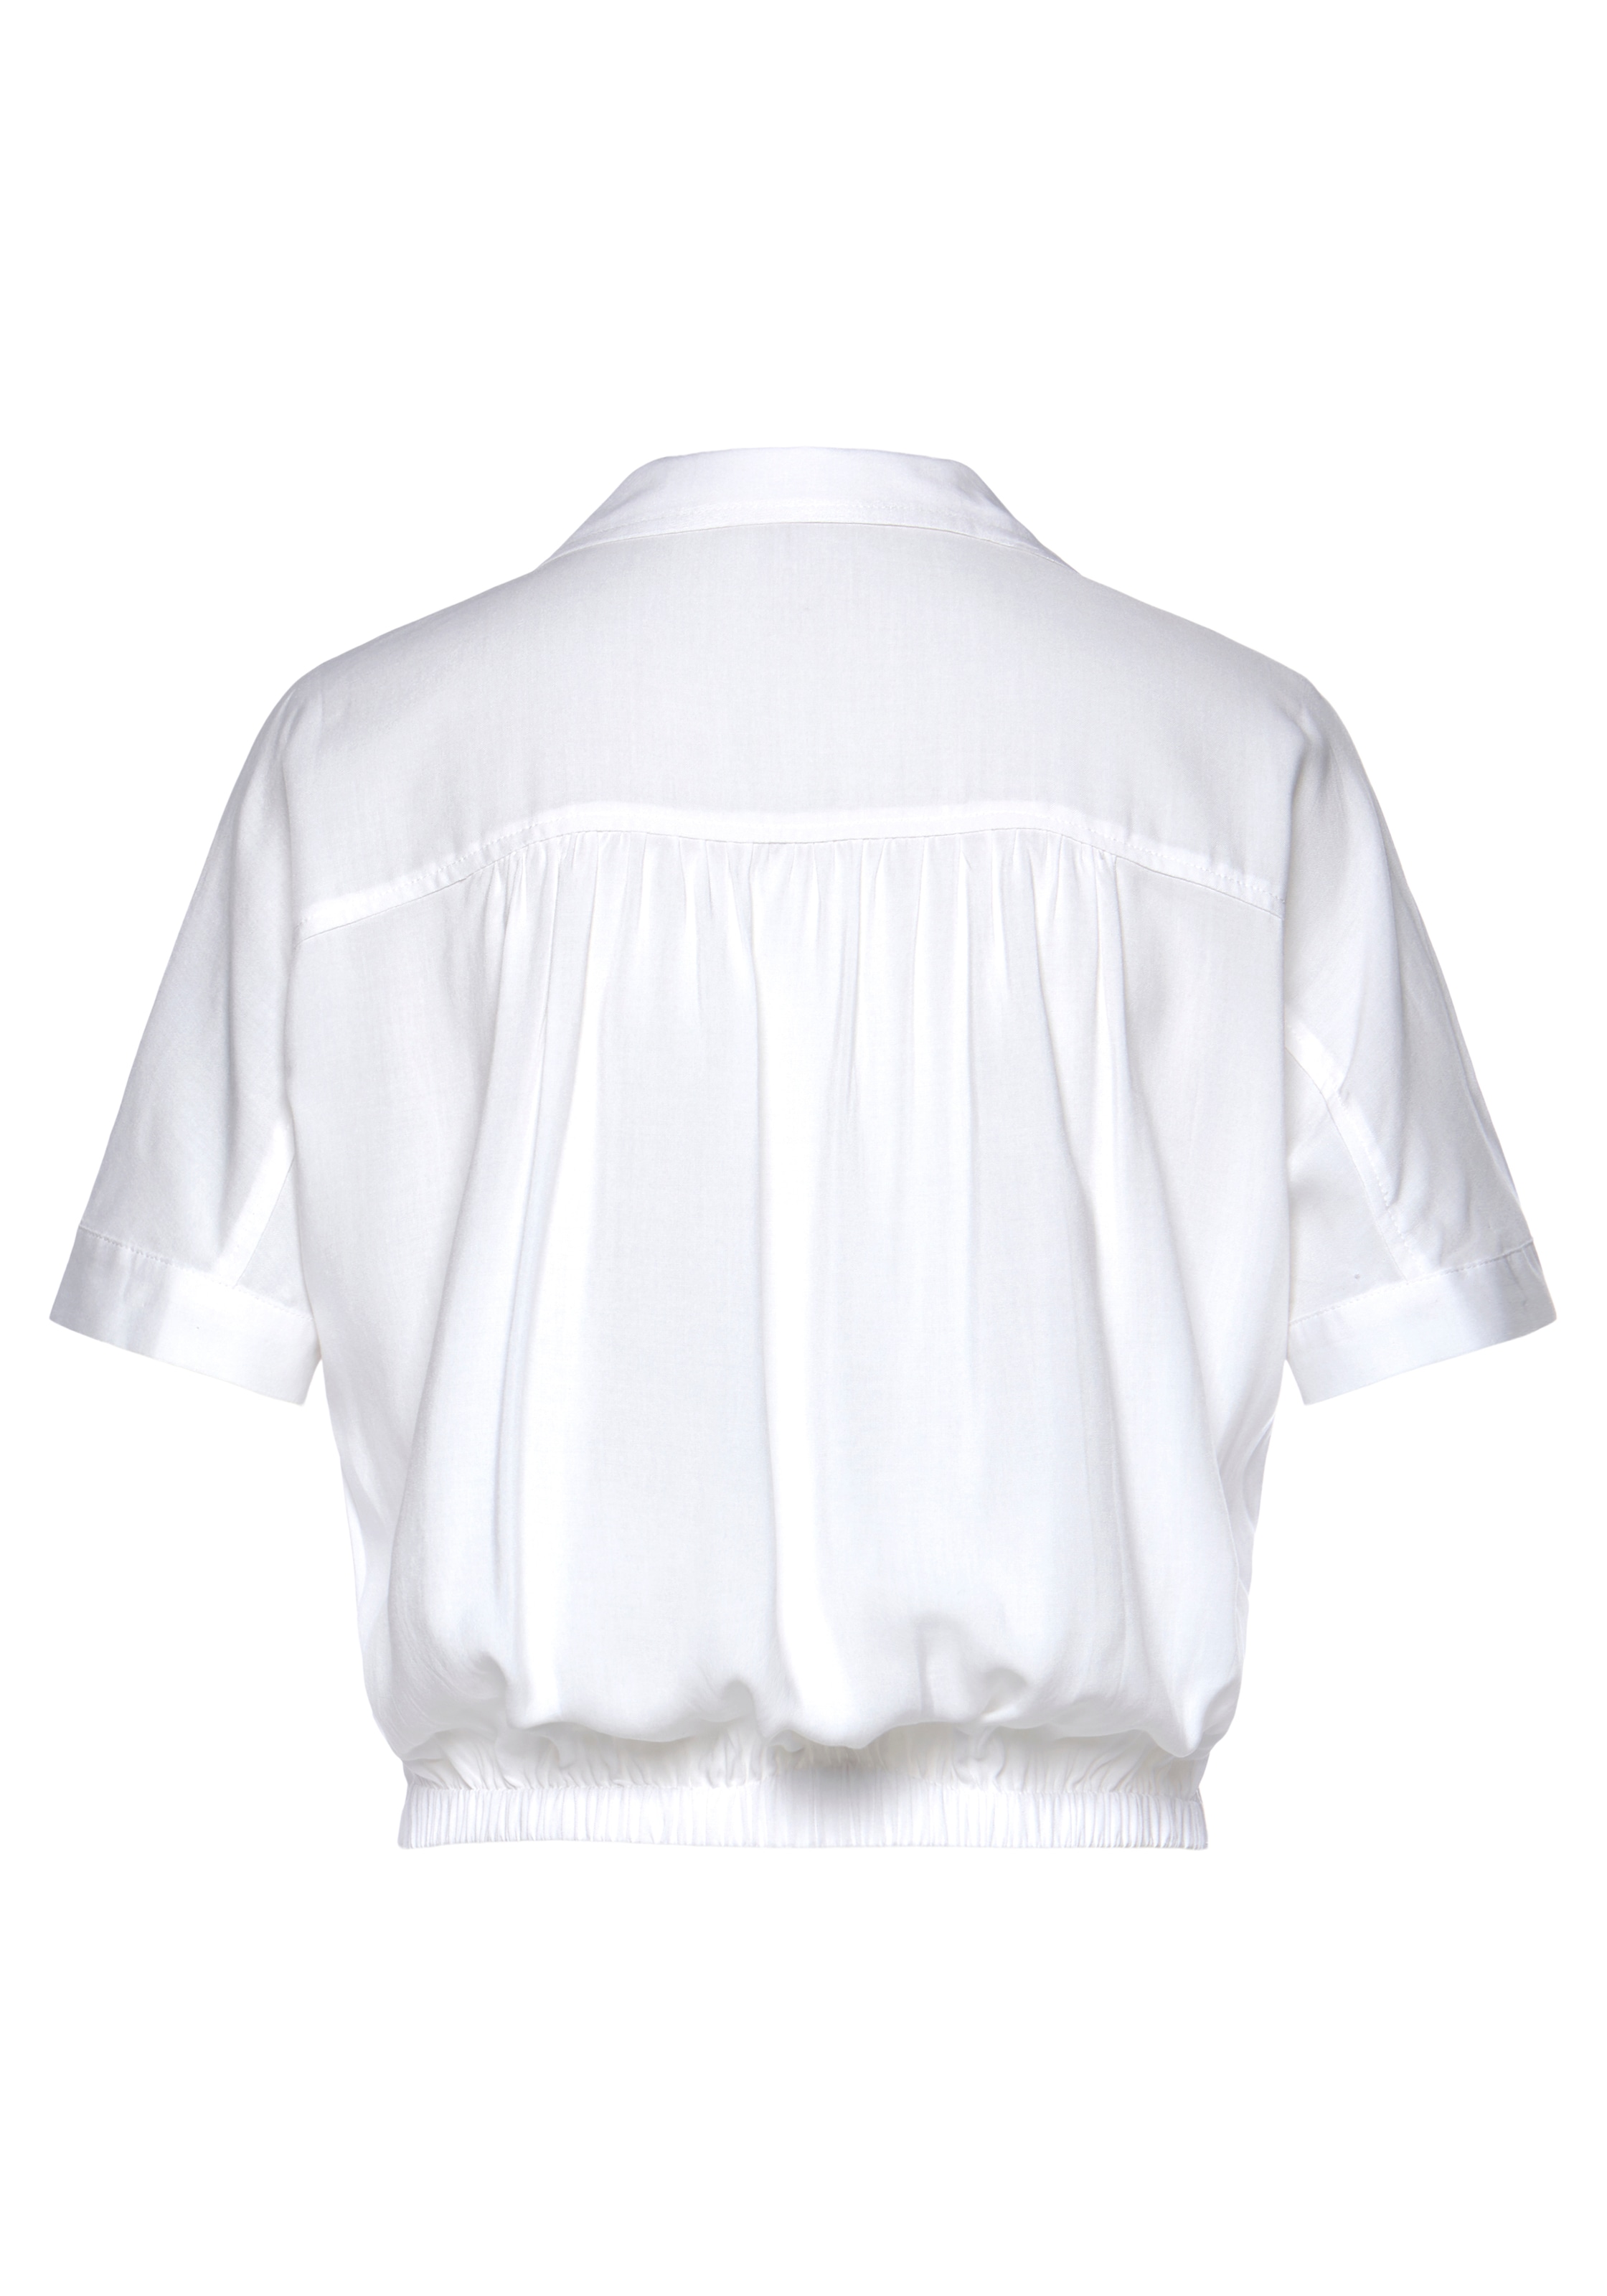 Buffalo Hemdbluse, mit Knotendetail, Kurzarmbluse, Hemdkragen, Basic bei ♕ | Blusenshirts